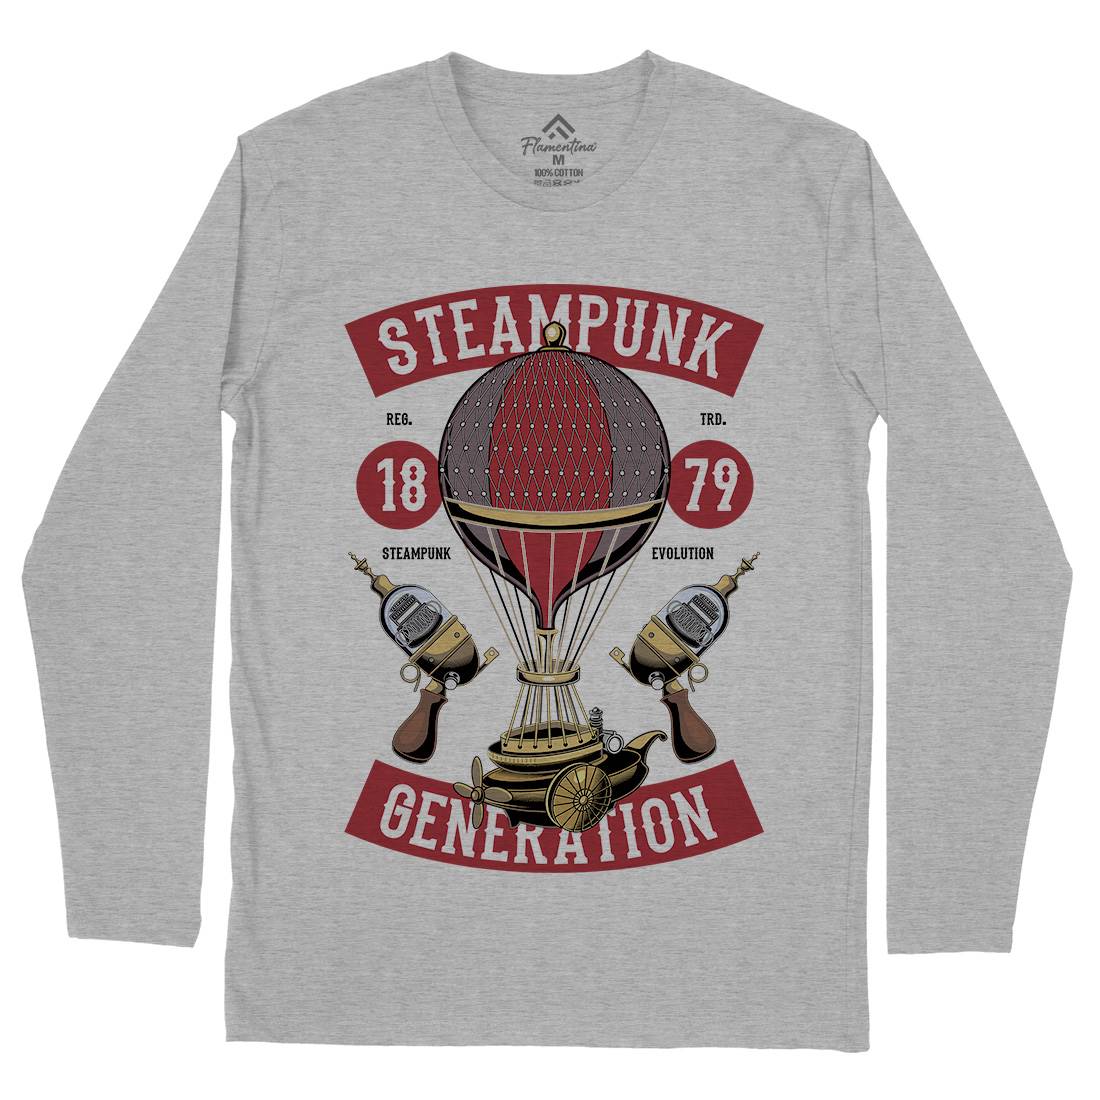 Generation Mens Long Sleeve T-Shirt Steampunk C449